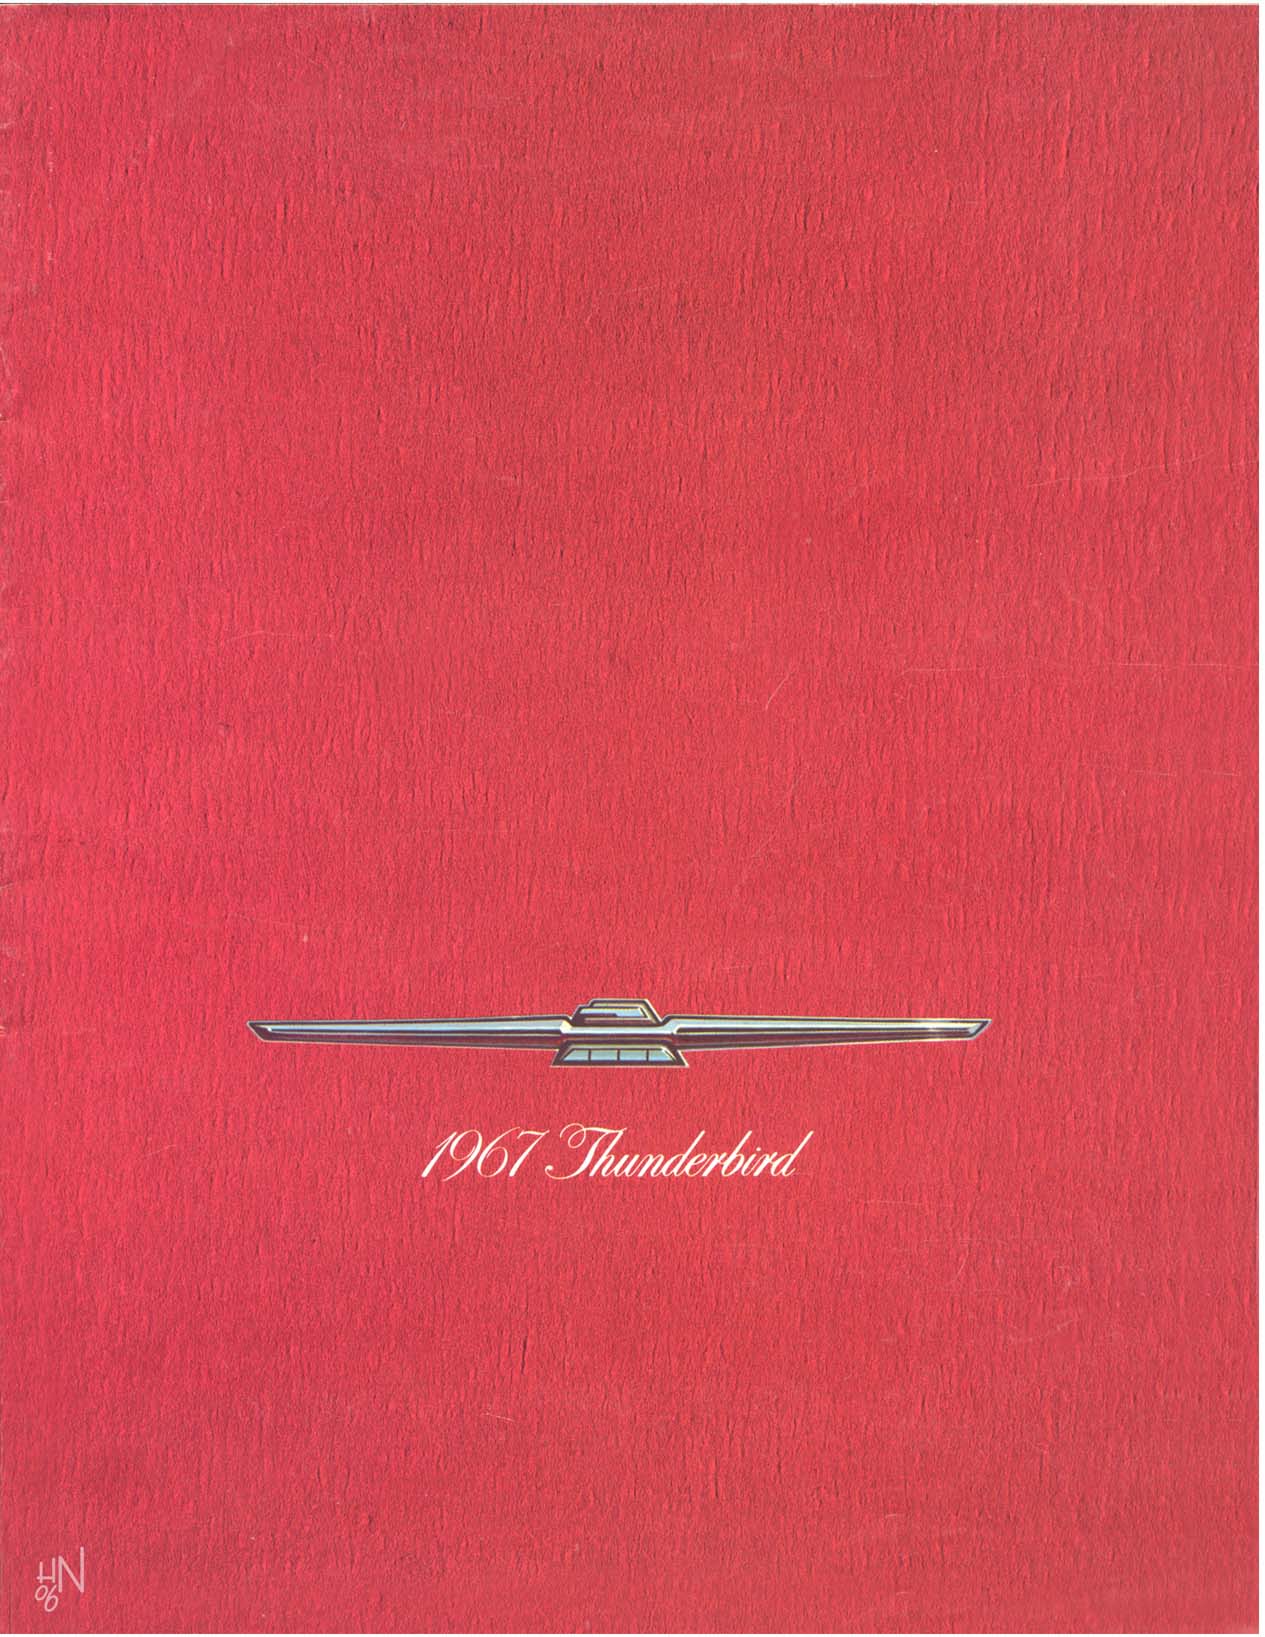 1967_Ford_Thunderbird-01